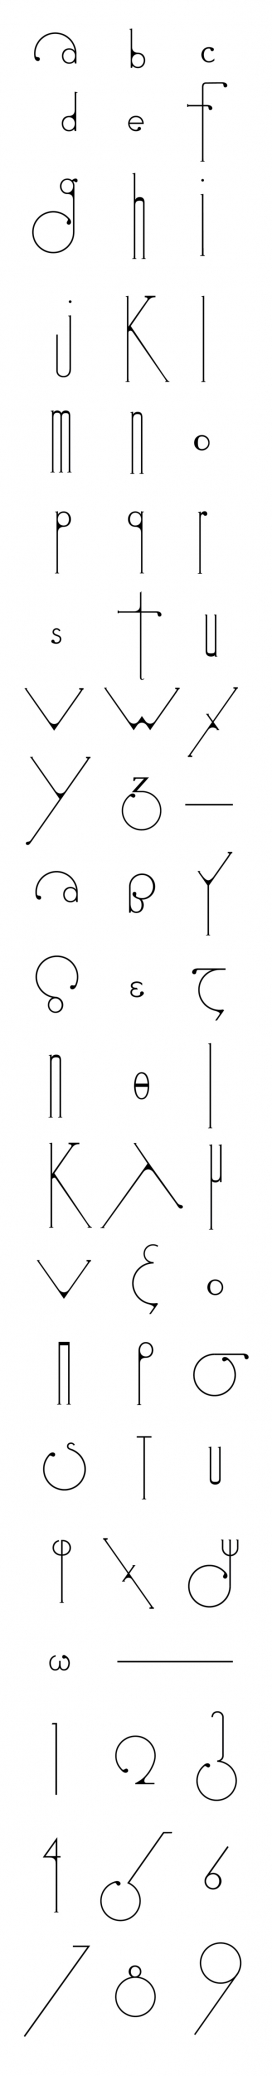 Futuracha细长火柴英文字体设计-希腊雅典odysseas gp平面设计师作品